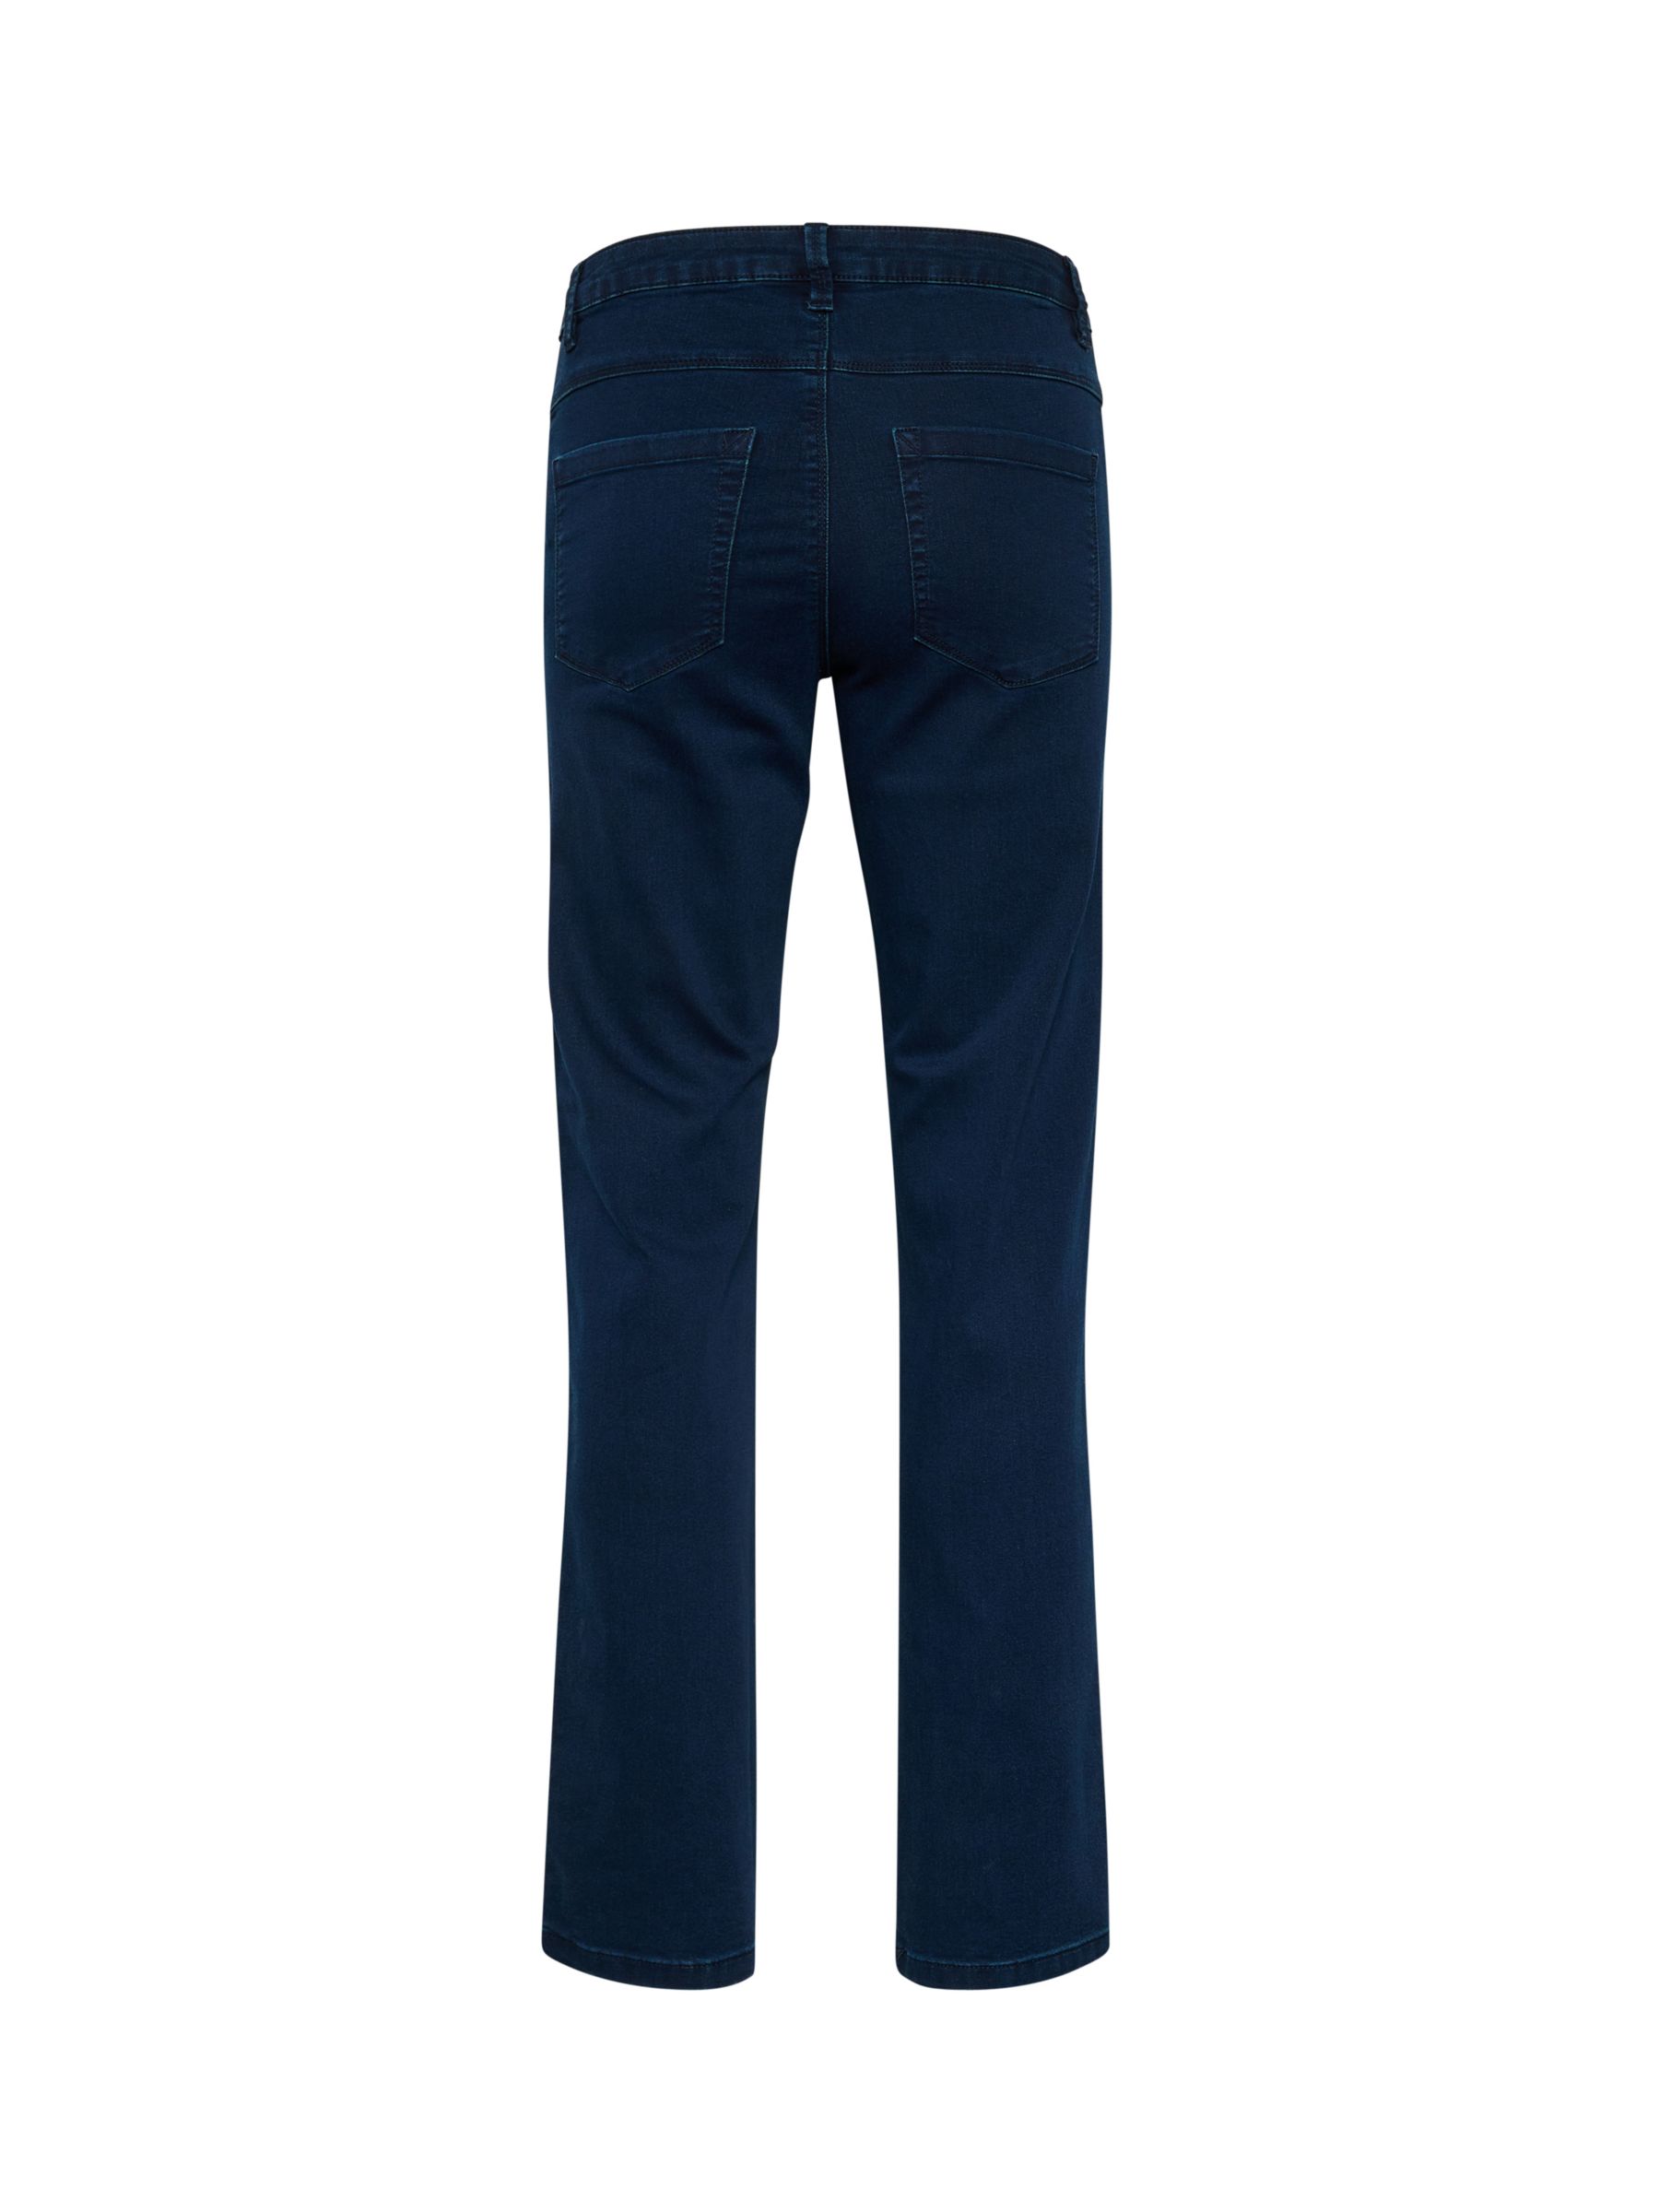 KAFFE Vicky Straight Leg Jeans, Dark Blue Denim at John Lewis & Partners